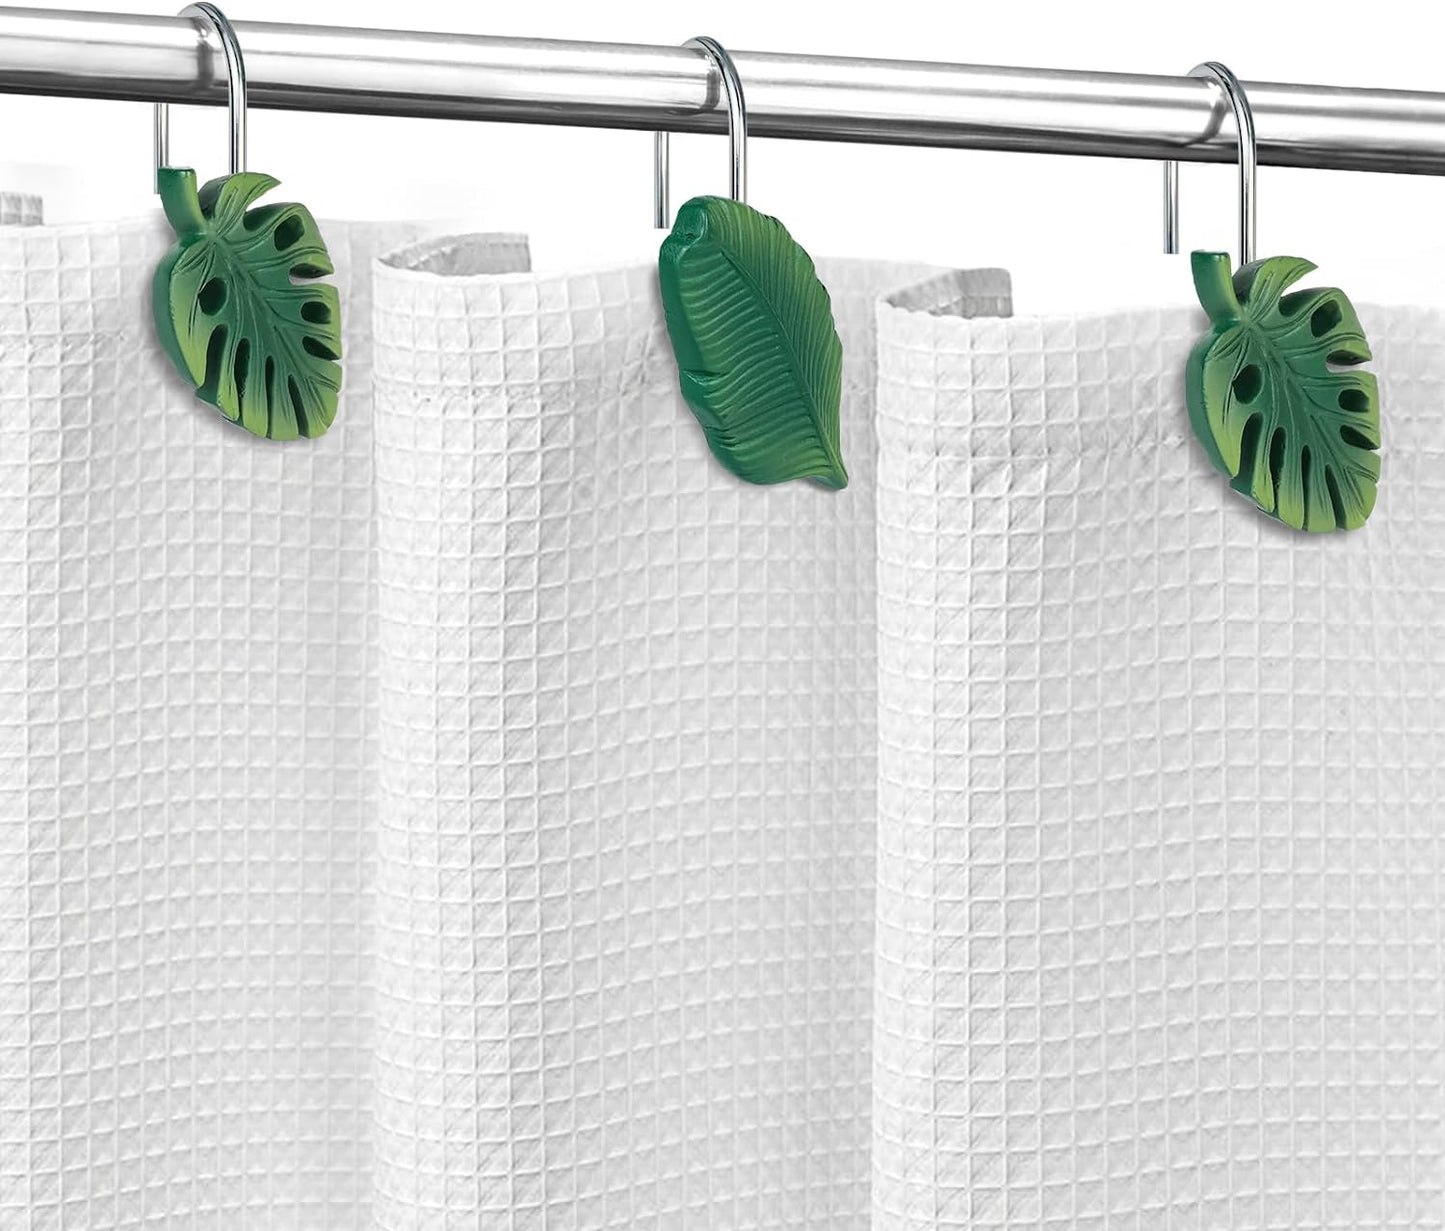 Tropical Leaf Decorative Shower Curtain Hooks Green Botanical Shower Curtain Rings, Resin, Monstera Deliciosa Strelitzia Reginae Leaves Shower Curtain Hangers for Bathroom, Set of 12